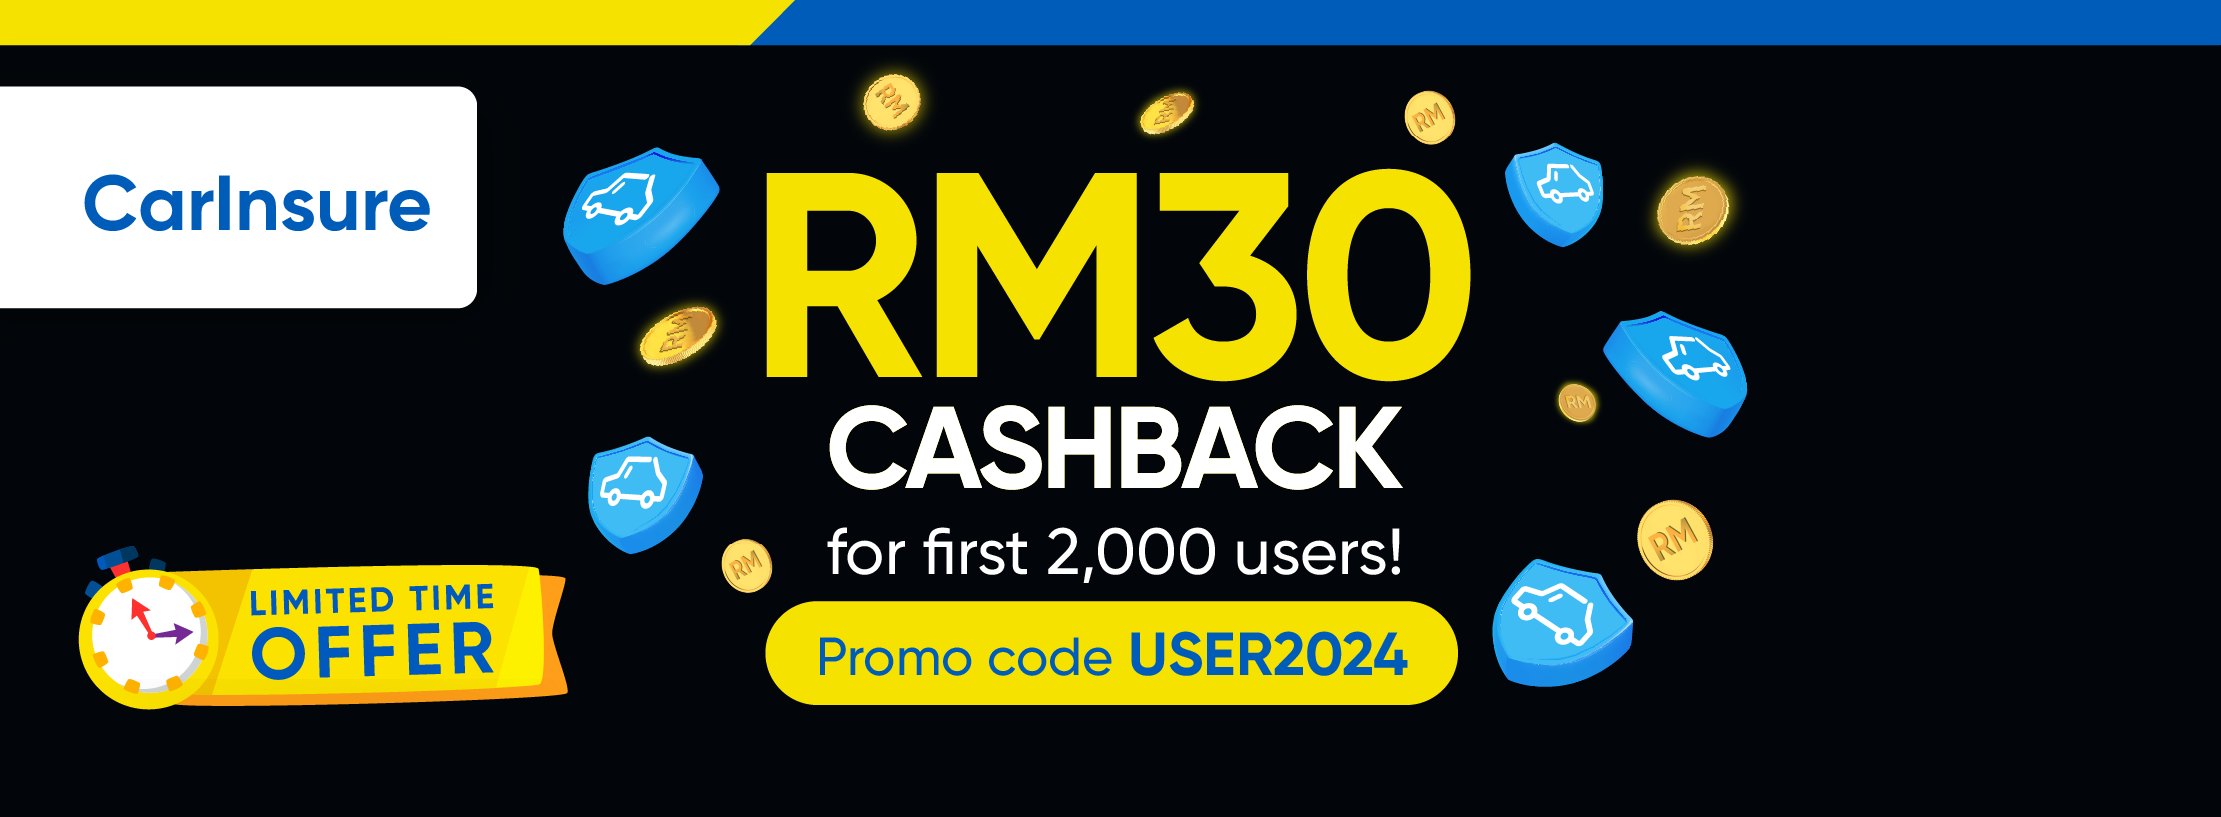 CarInsure_RM30_CashRebate_Web_Promo-2.png